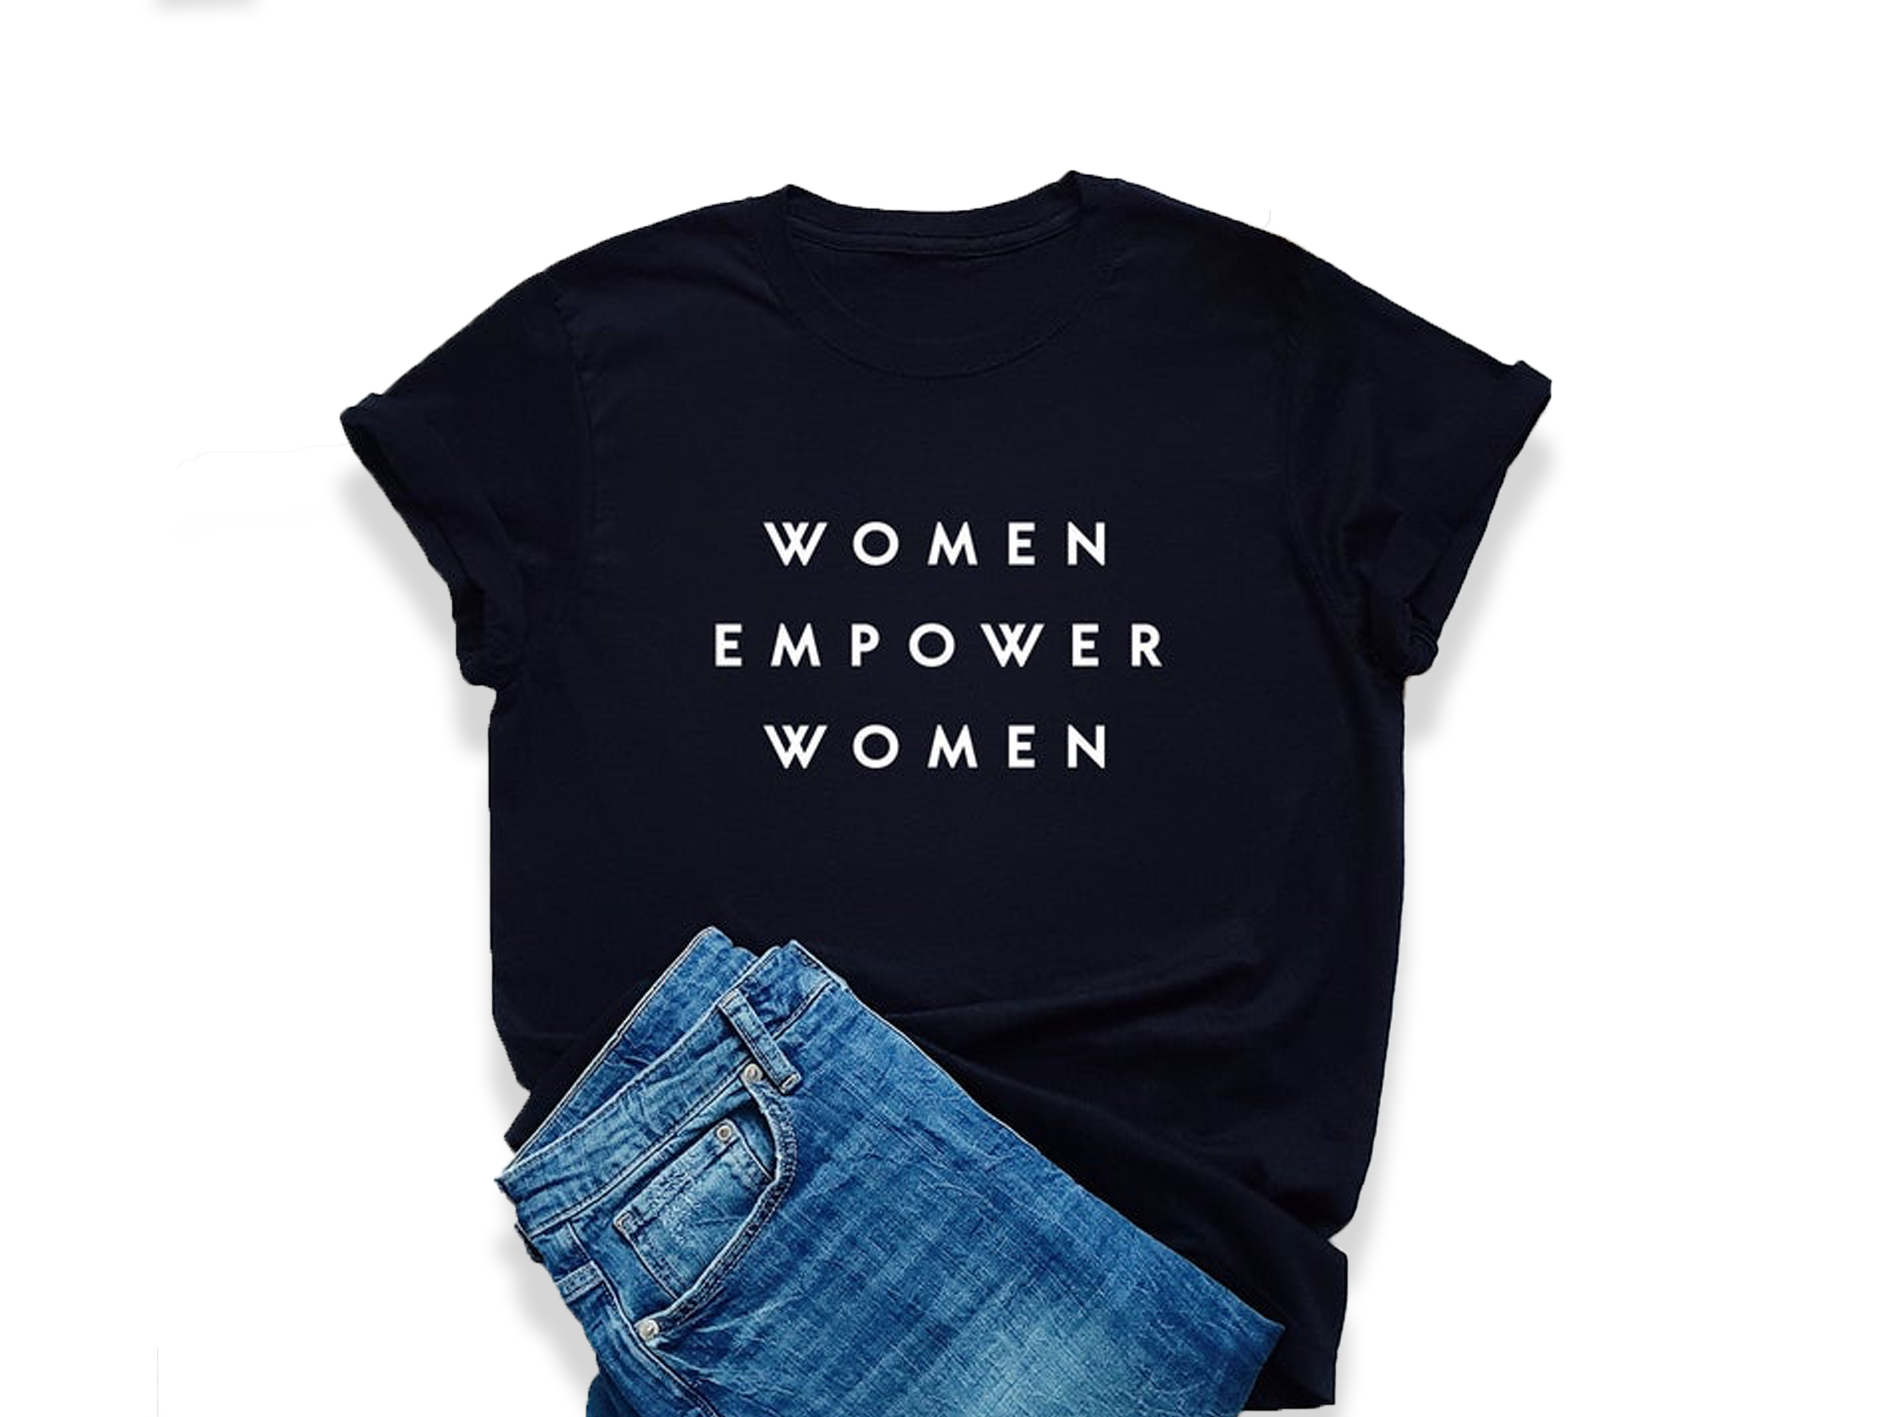 "Women empower Women" Tee